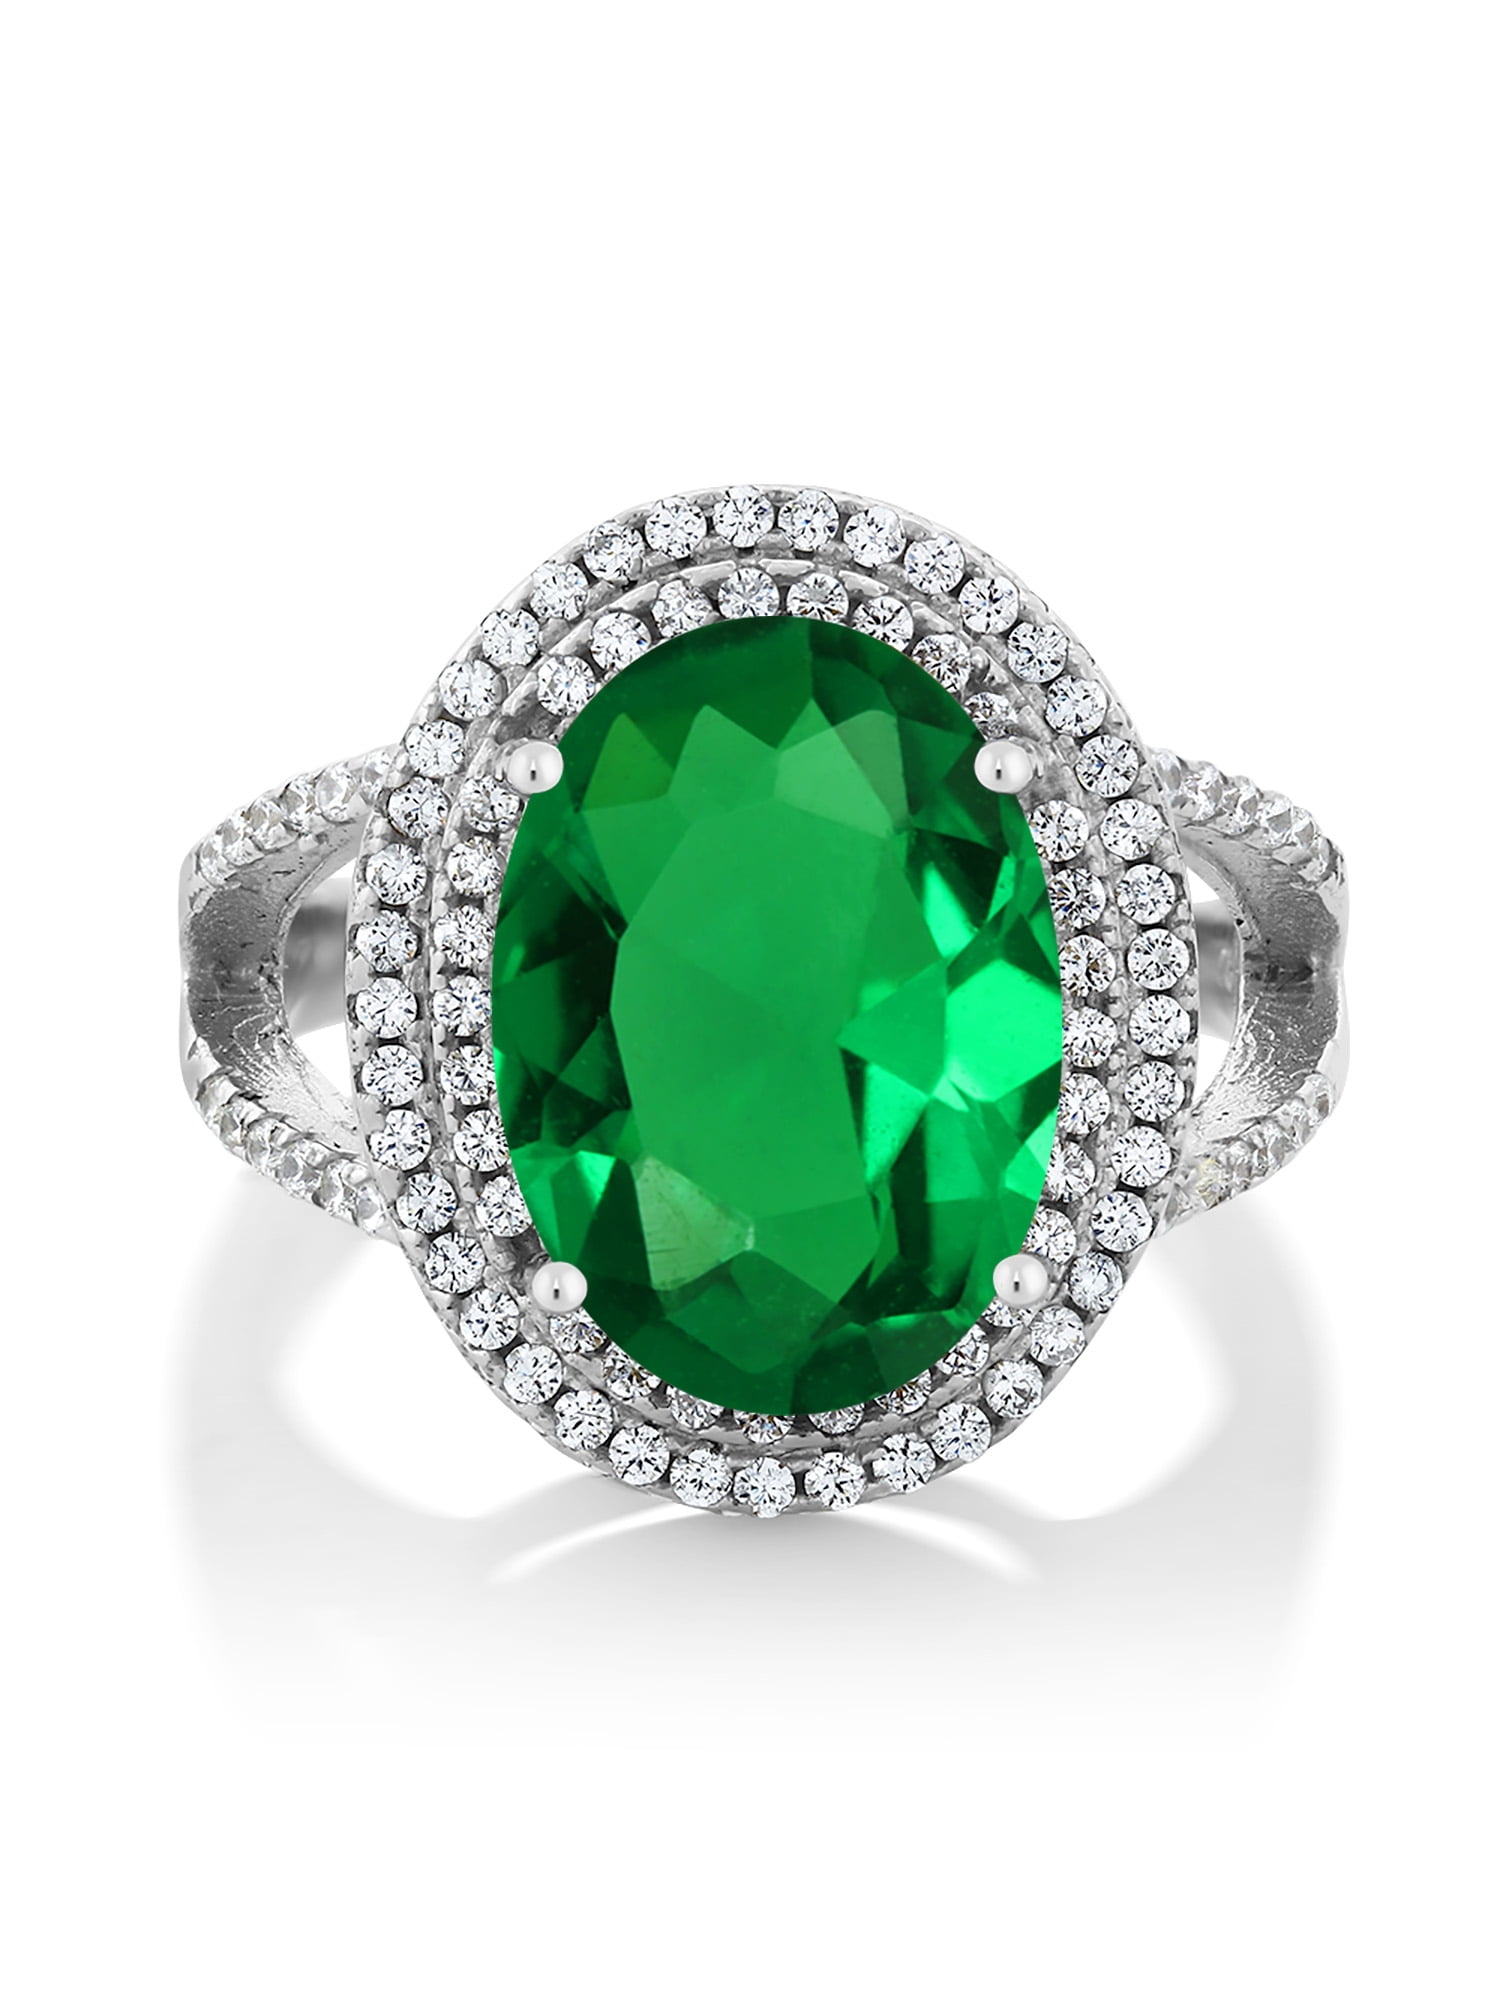 Emerald & White Topaz Gemstone Fashion Silver 18k goldplated Ring Size 6 7 8 9 